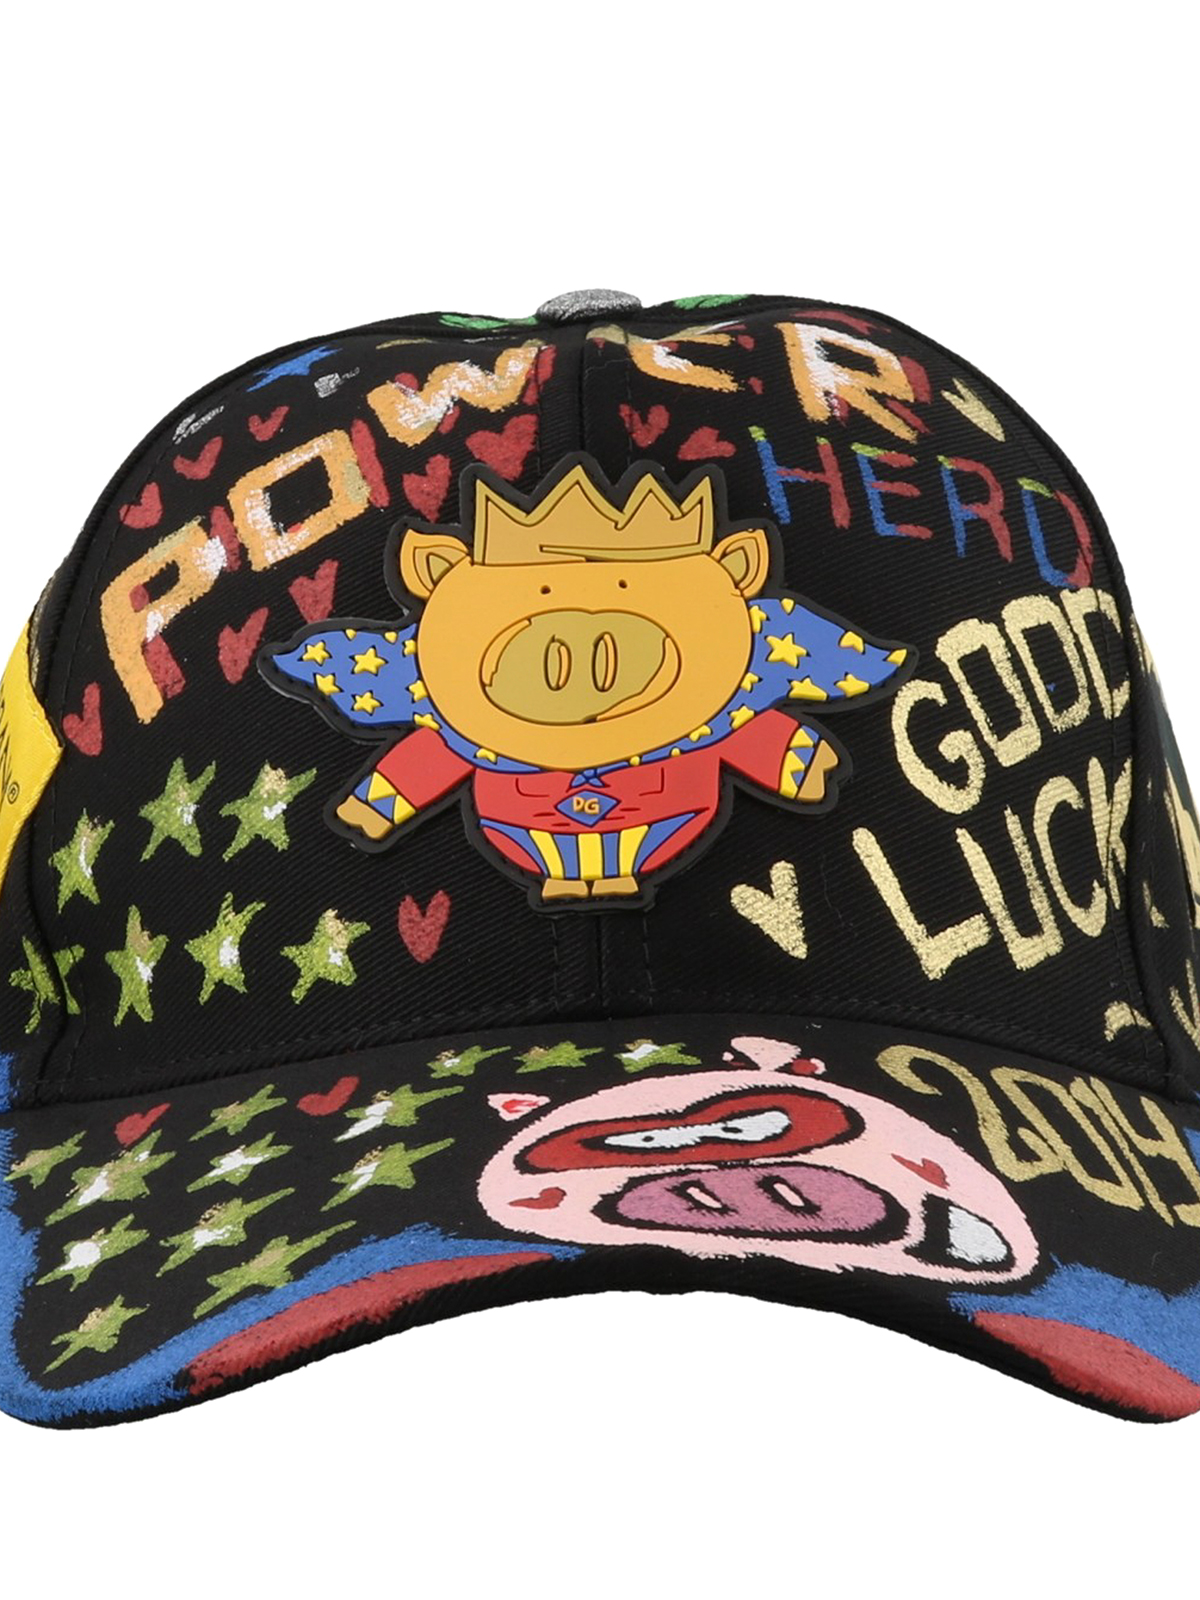 Hats caps Dolce & Gabbana - Mister Pig 2019 baseball cap - GH590ZGEF69N0000